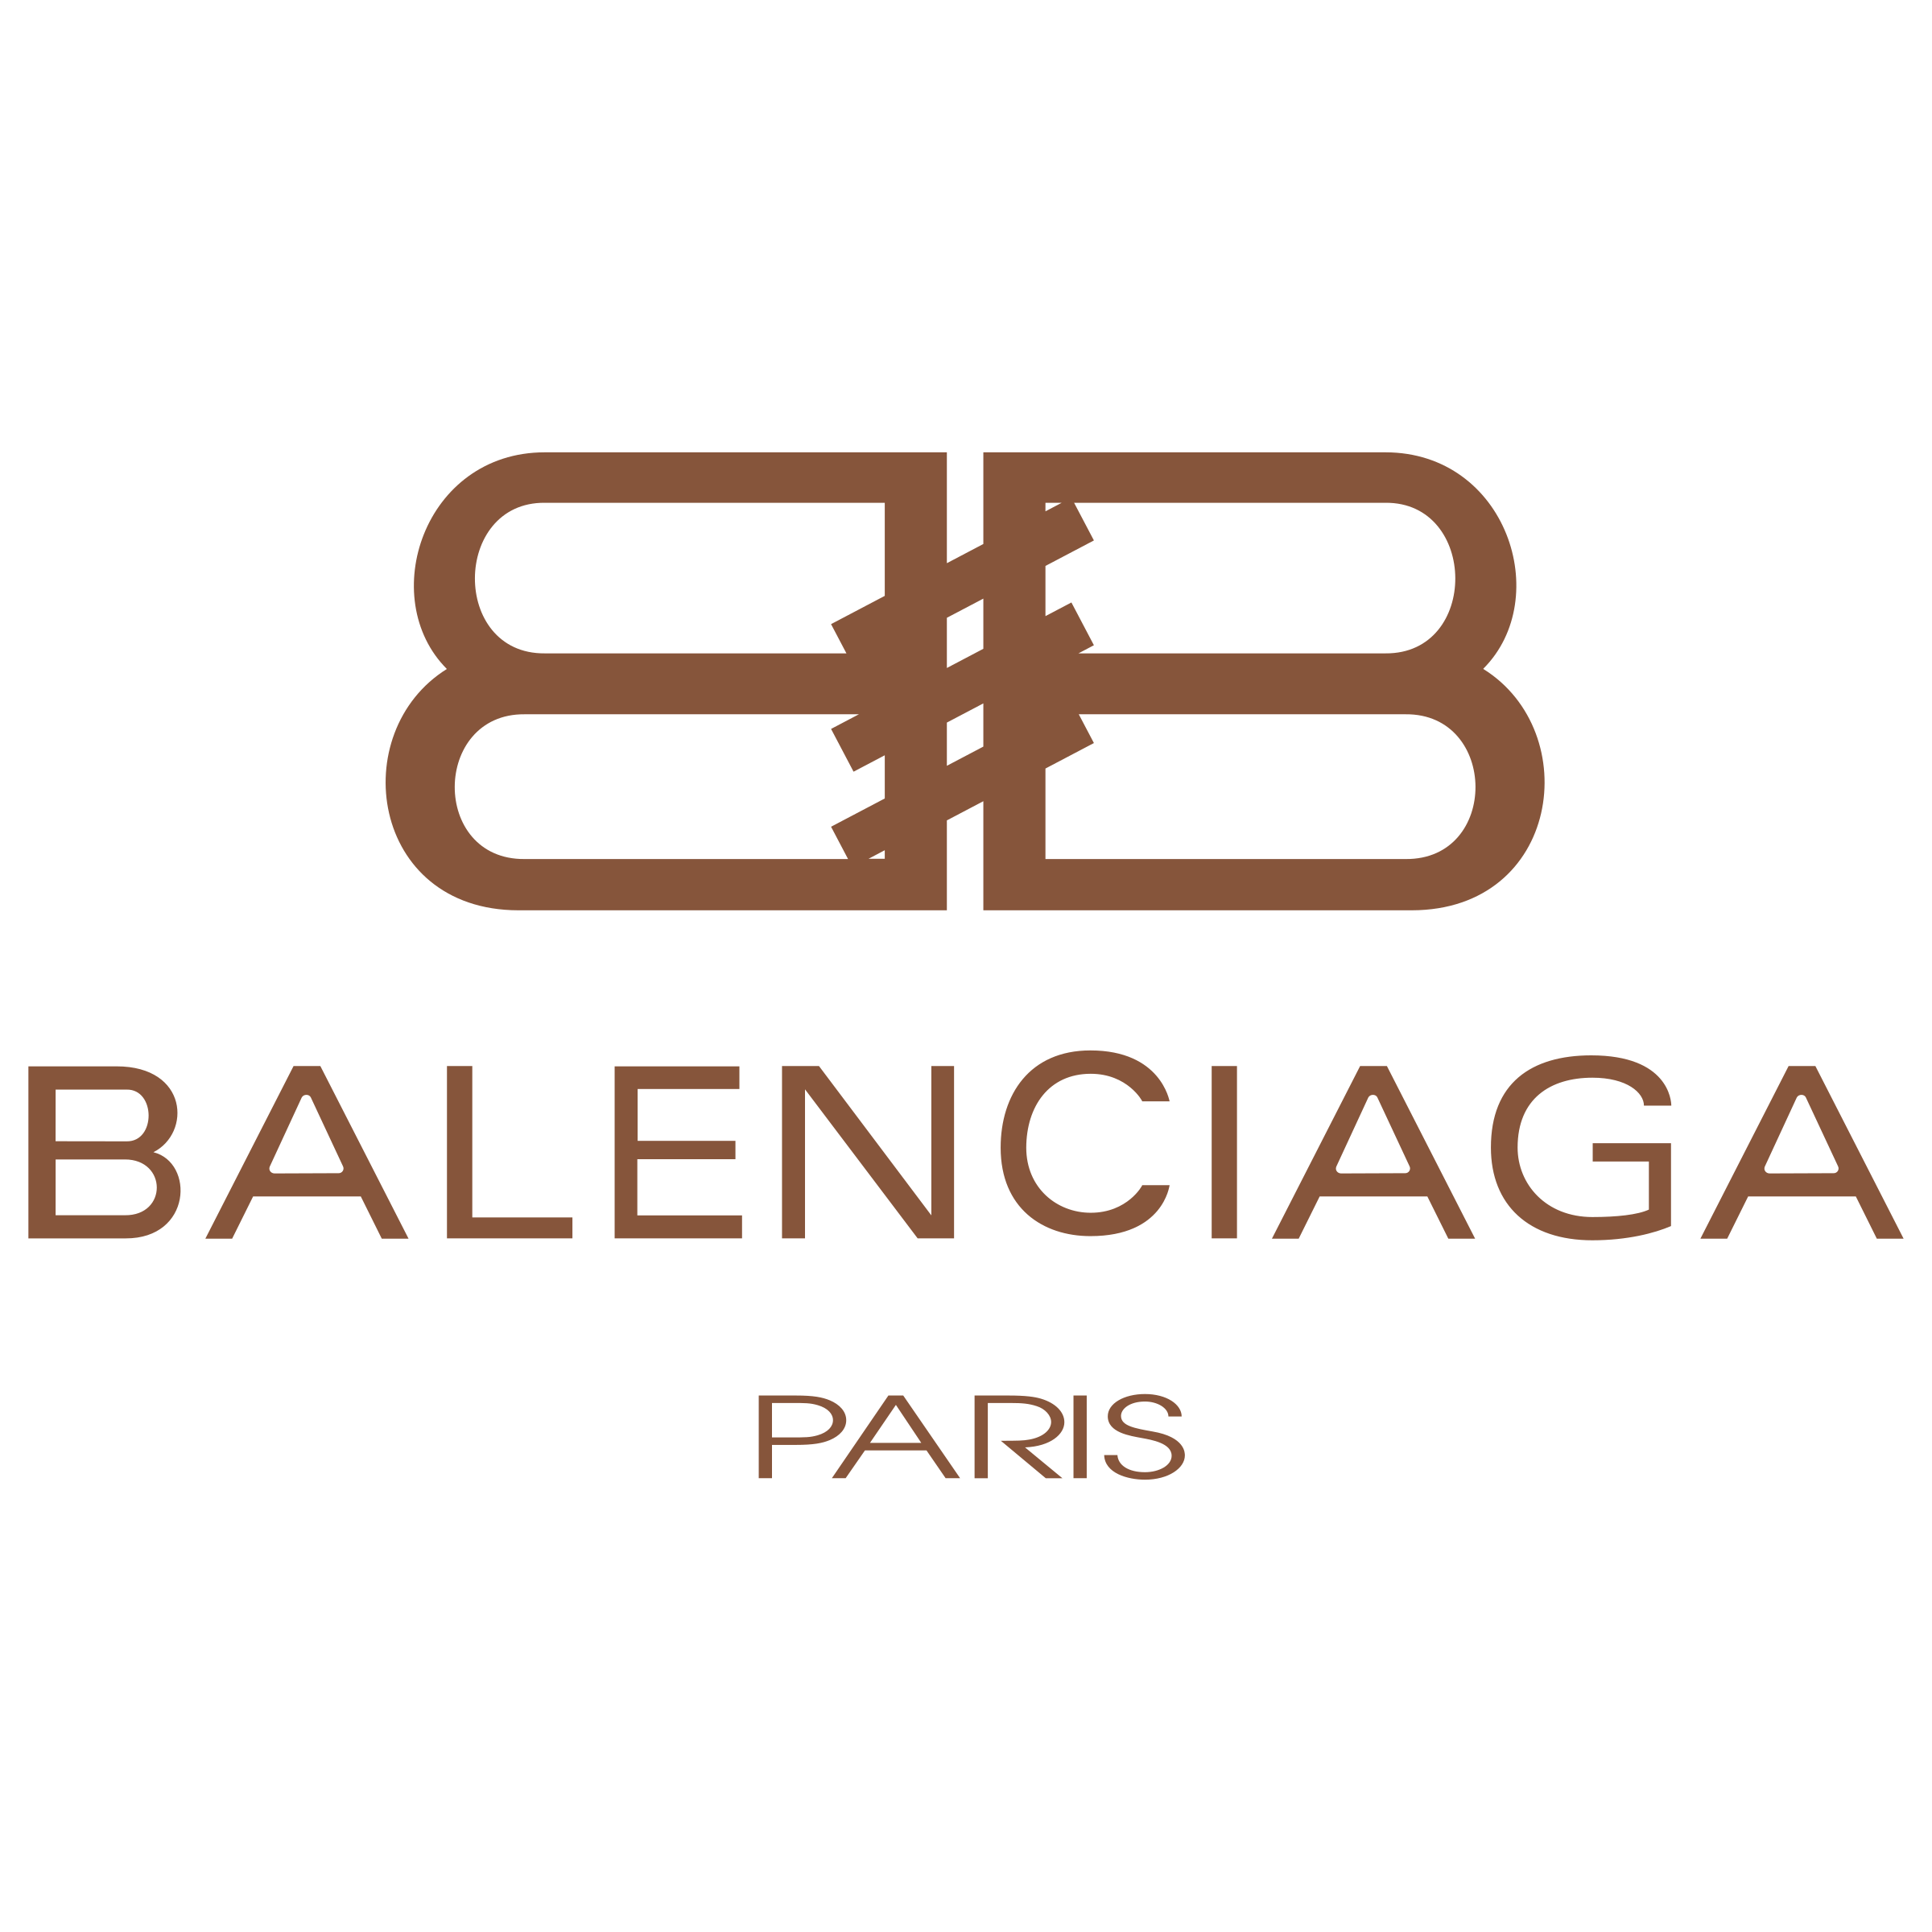 Balenciaga logo Immagini trasparenti